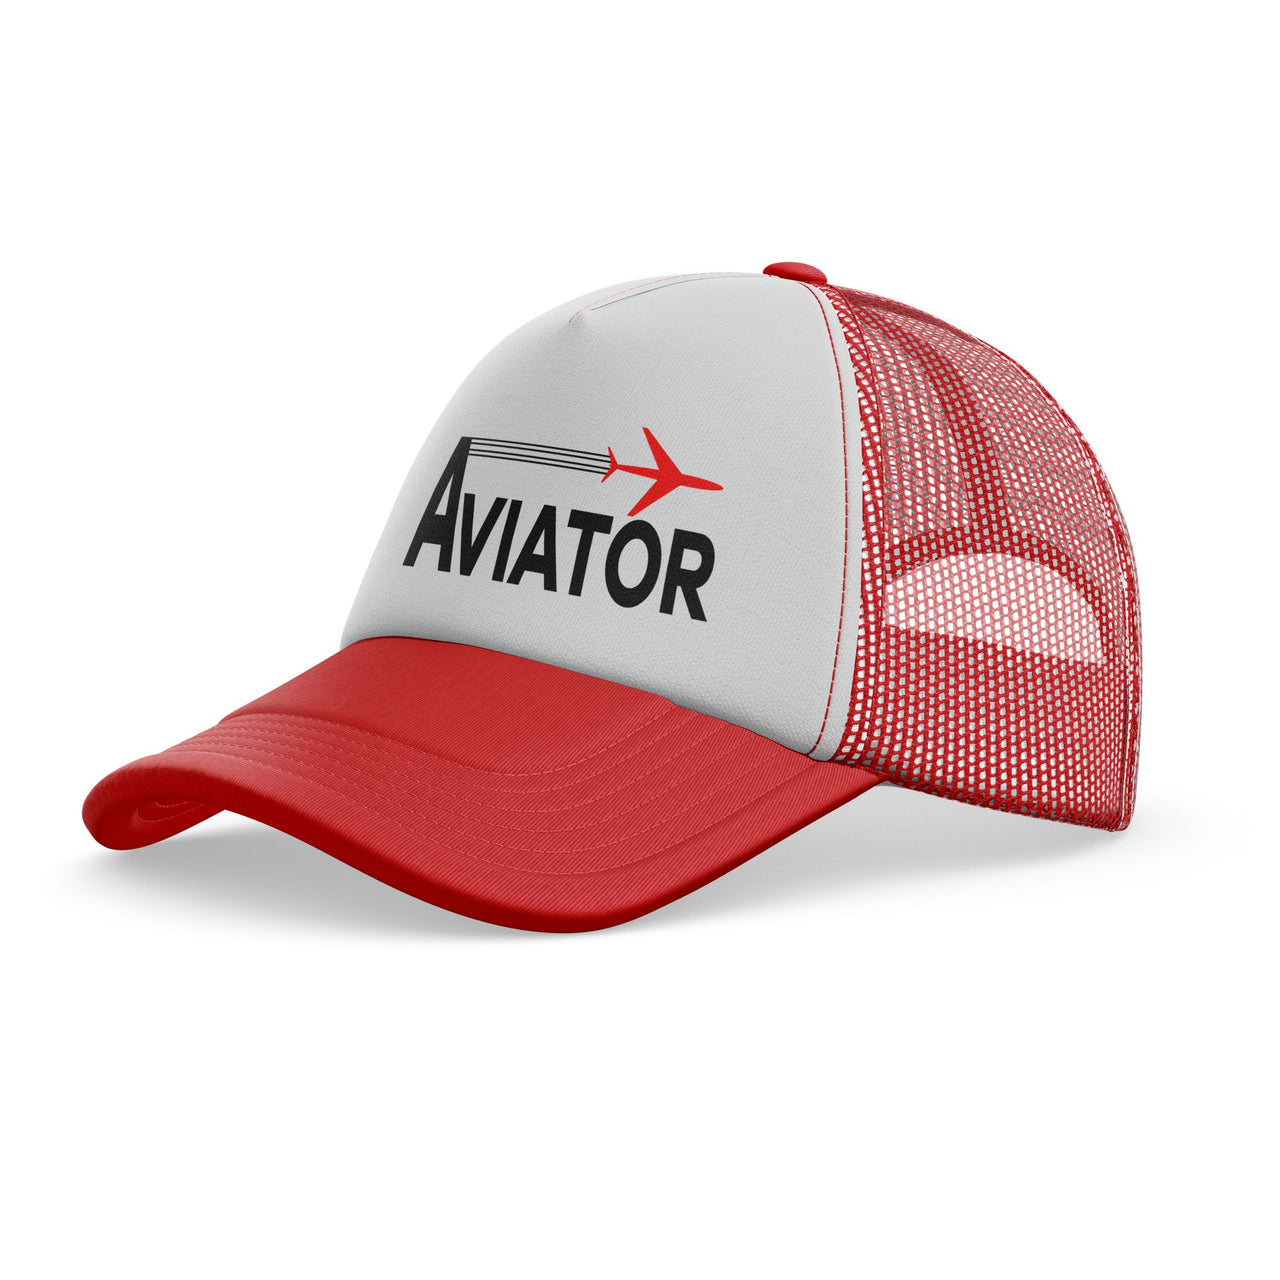 Aviator Designed Trucker Caps & Hats